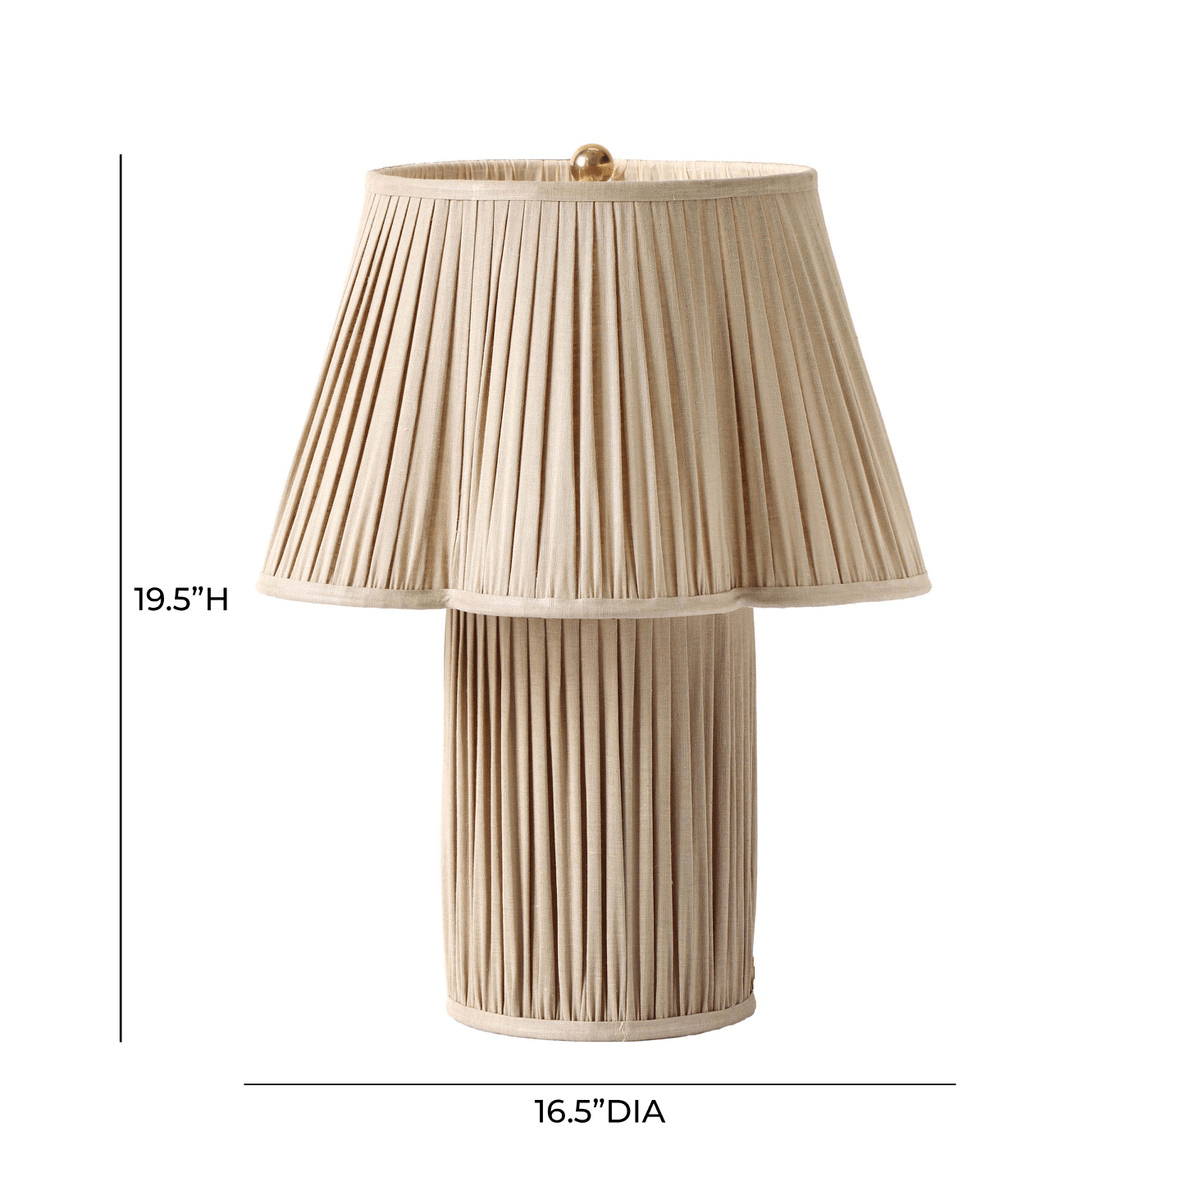 Lulu Table Lamp Table Lamps